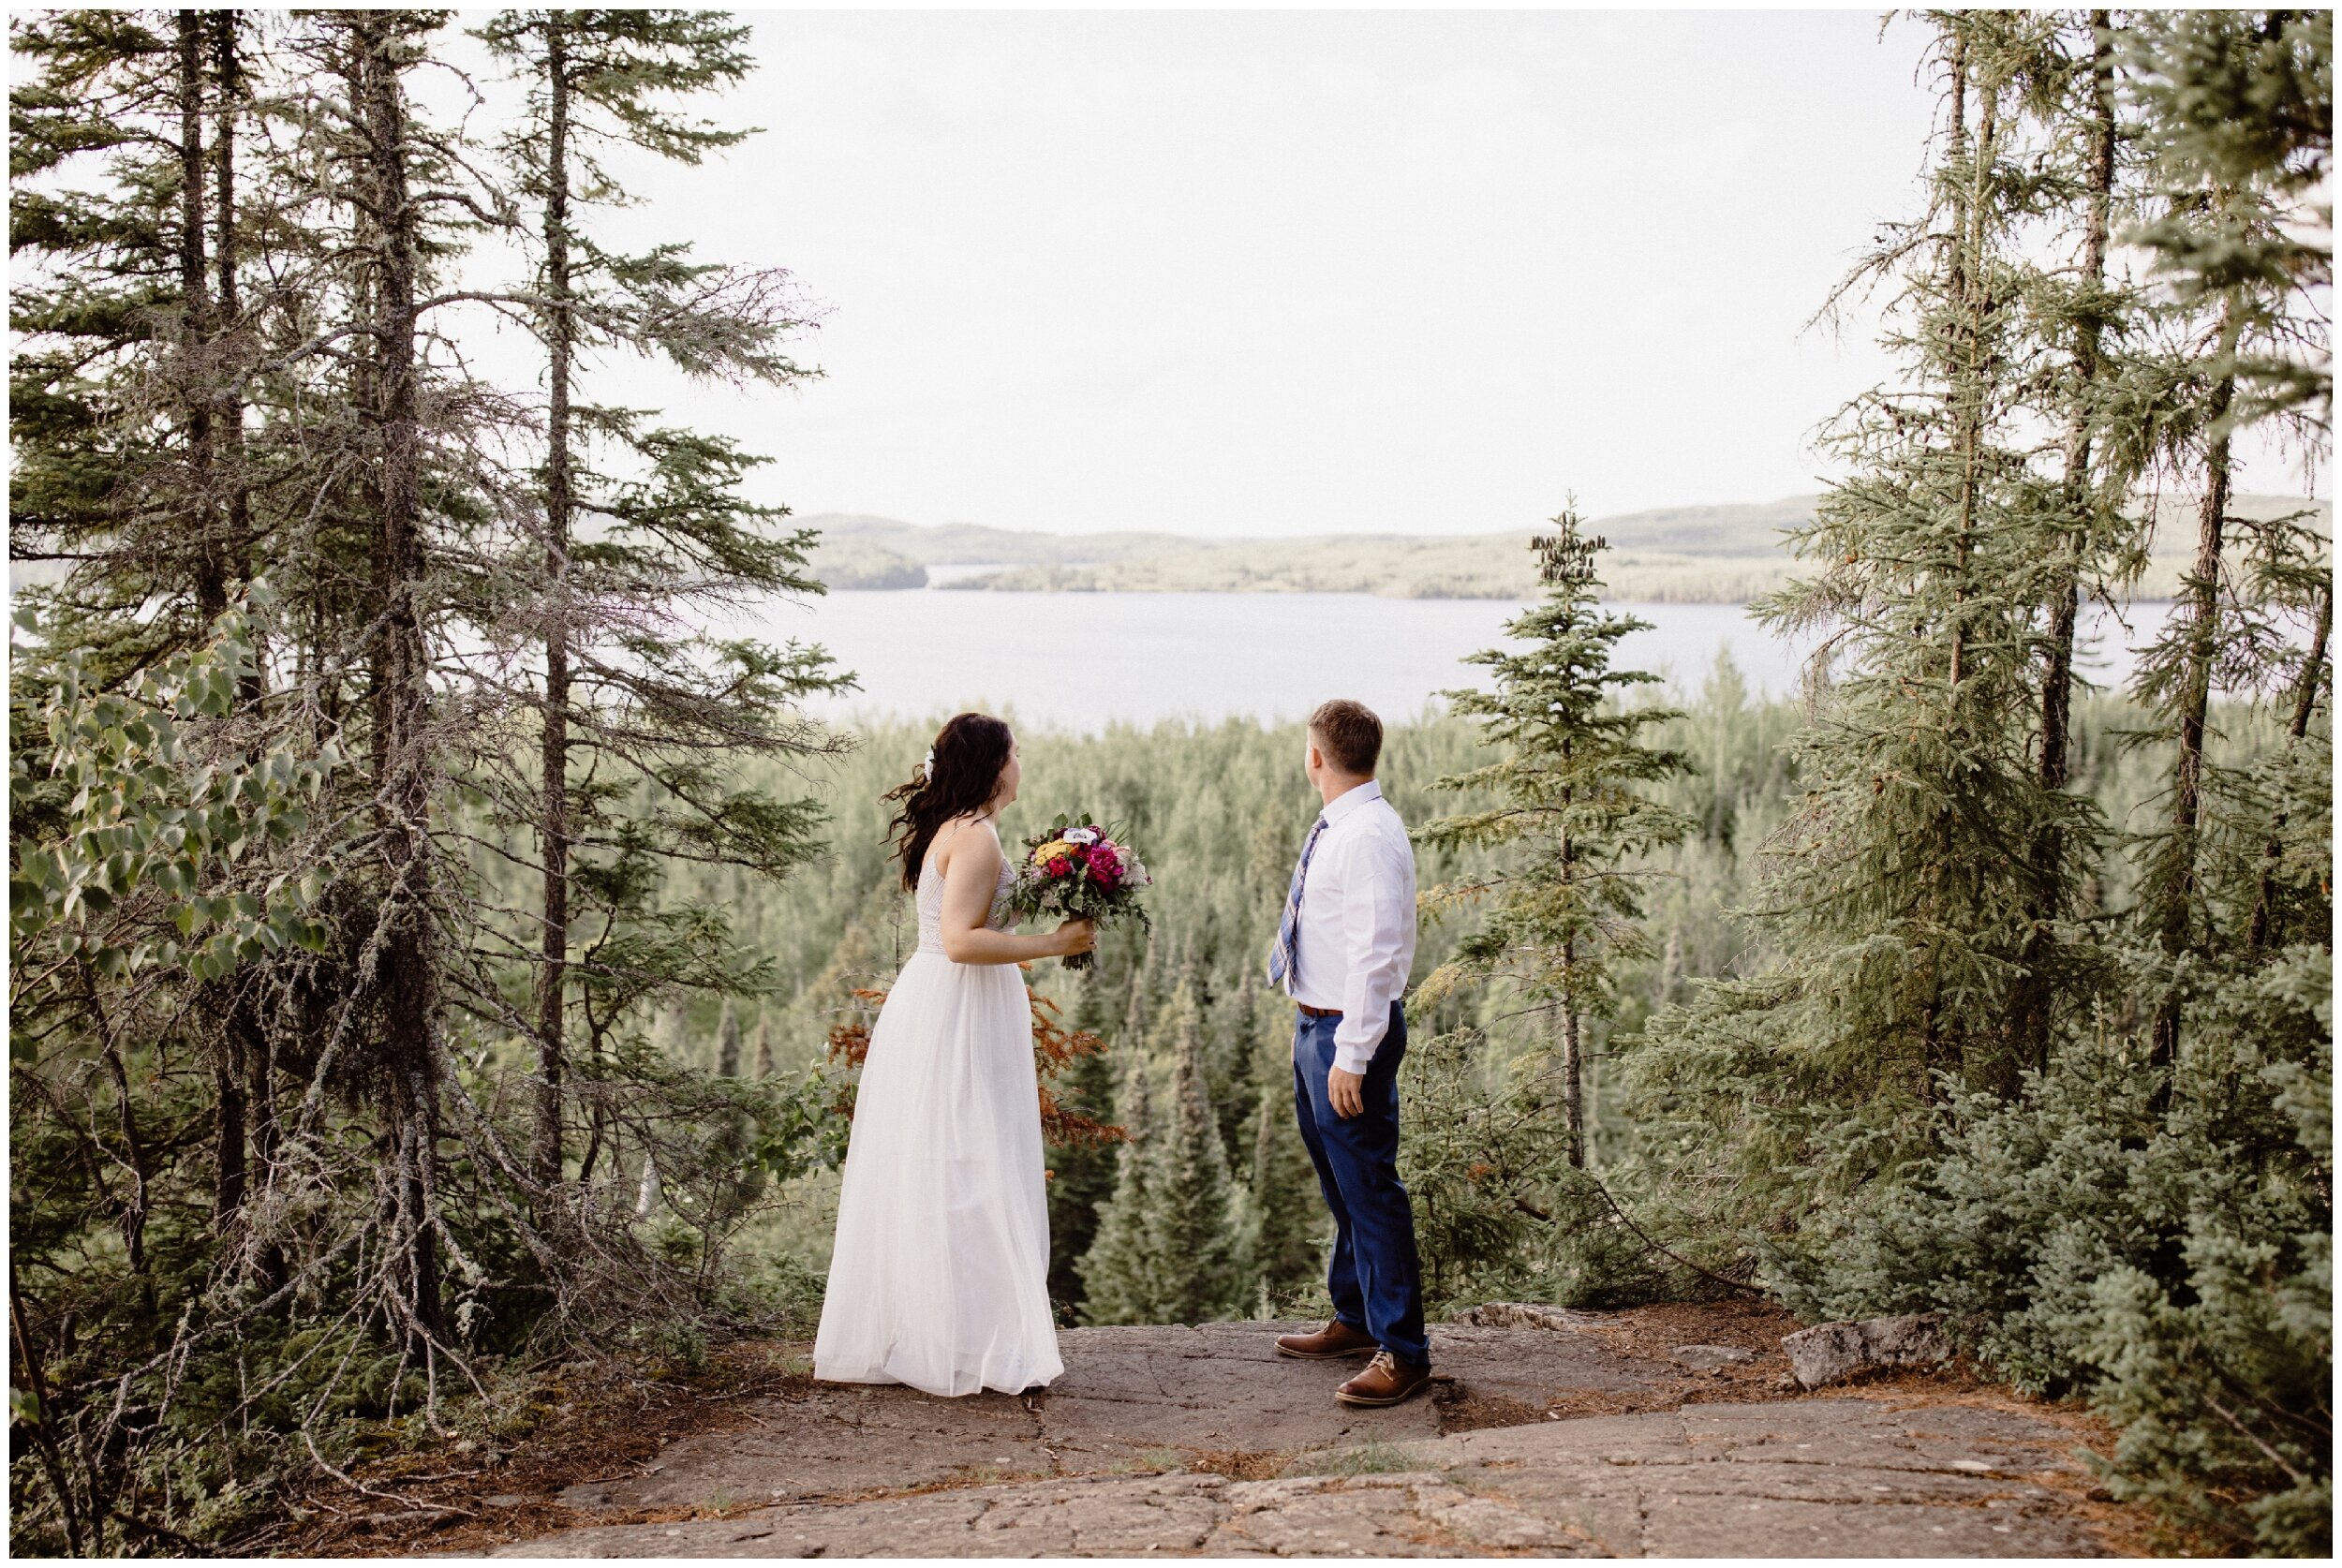 Elopement wedding on the gunflint trail in northern Minnesota